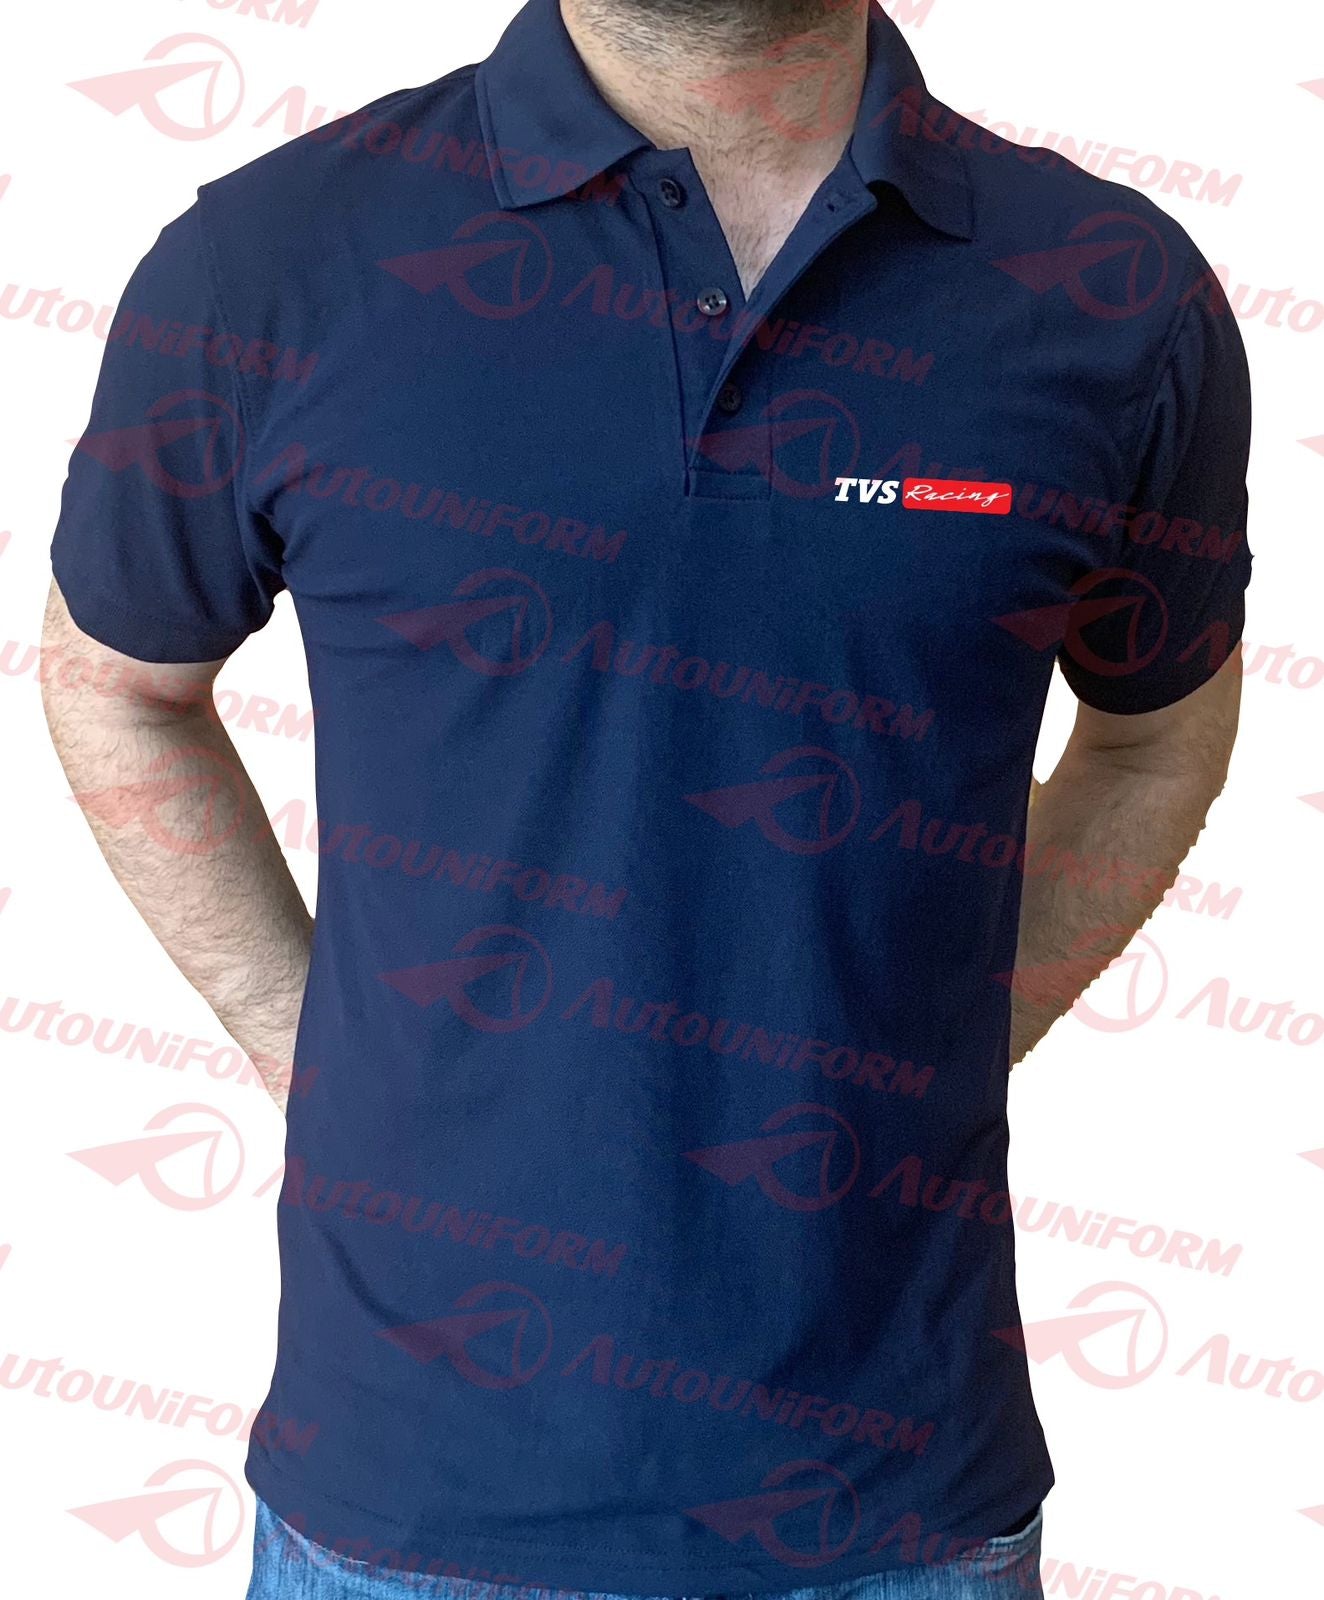 Buy TVS Navy blue T-Shirt only at www.autouniform.com